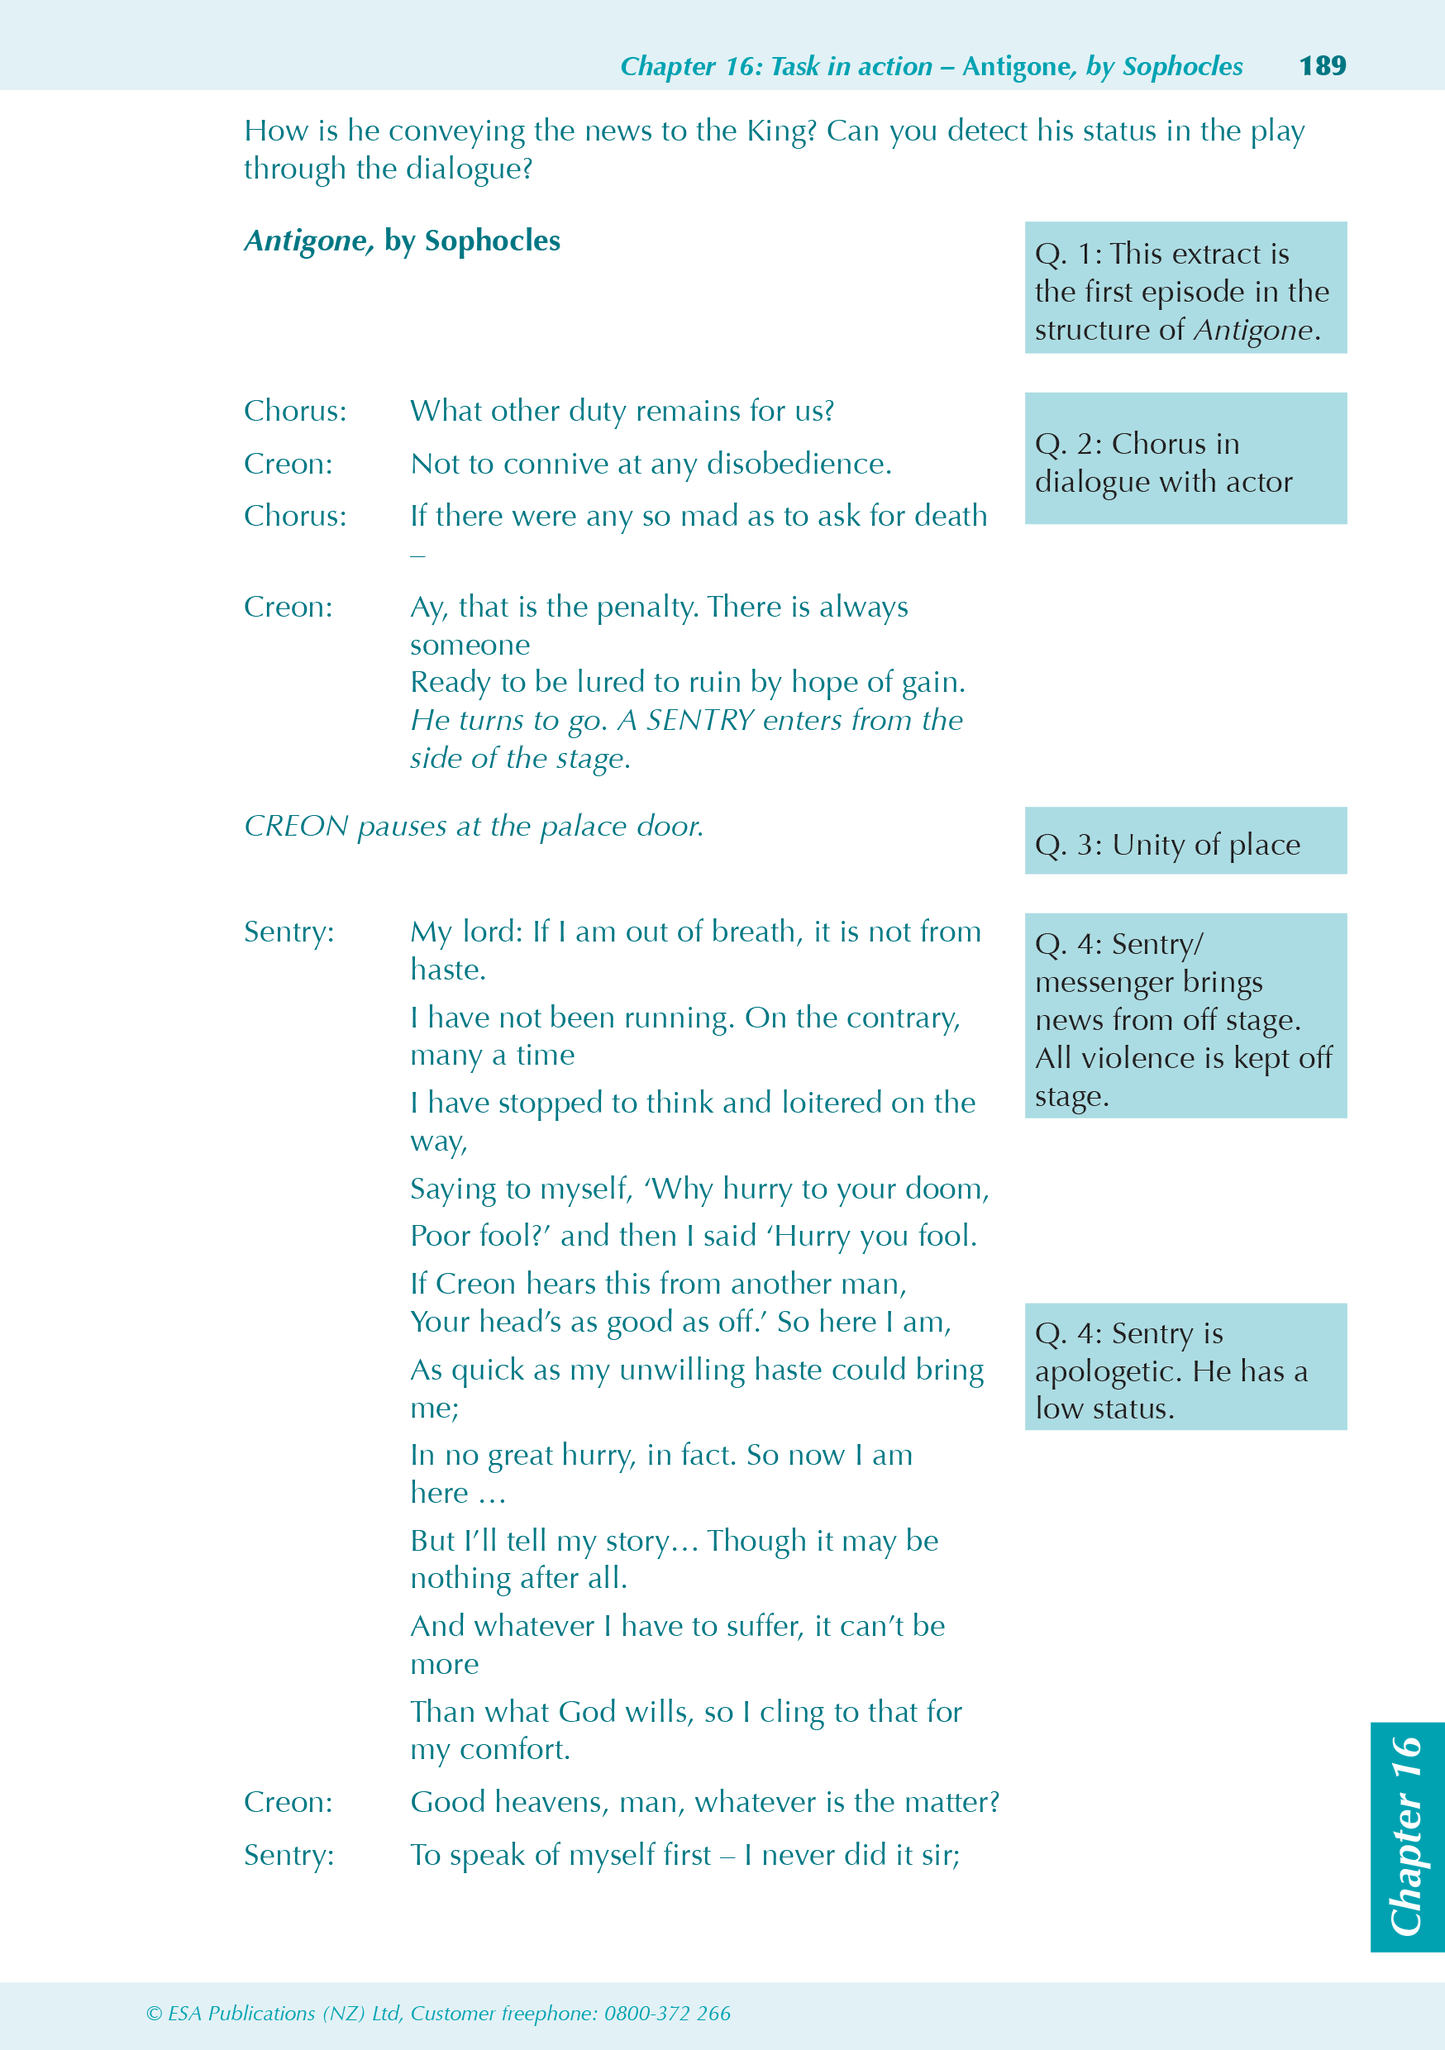 Level 2 Drama ESA Study Guide